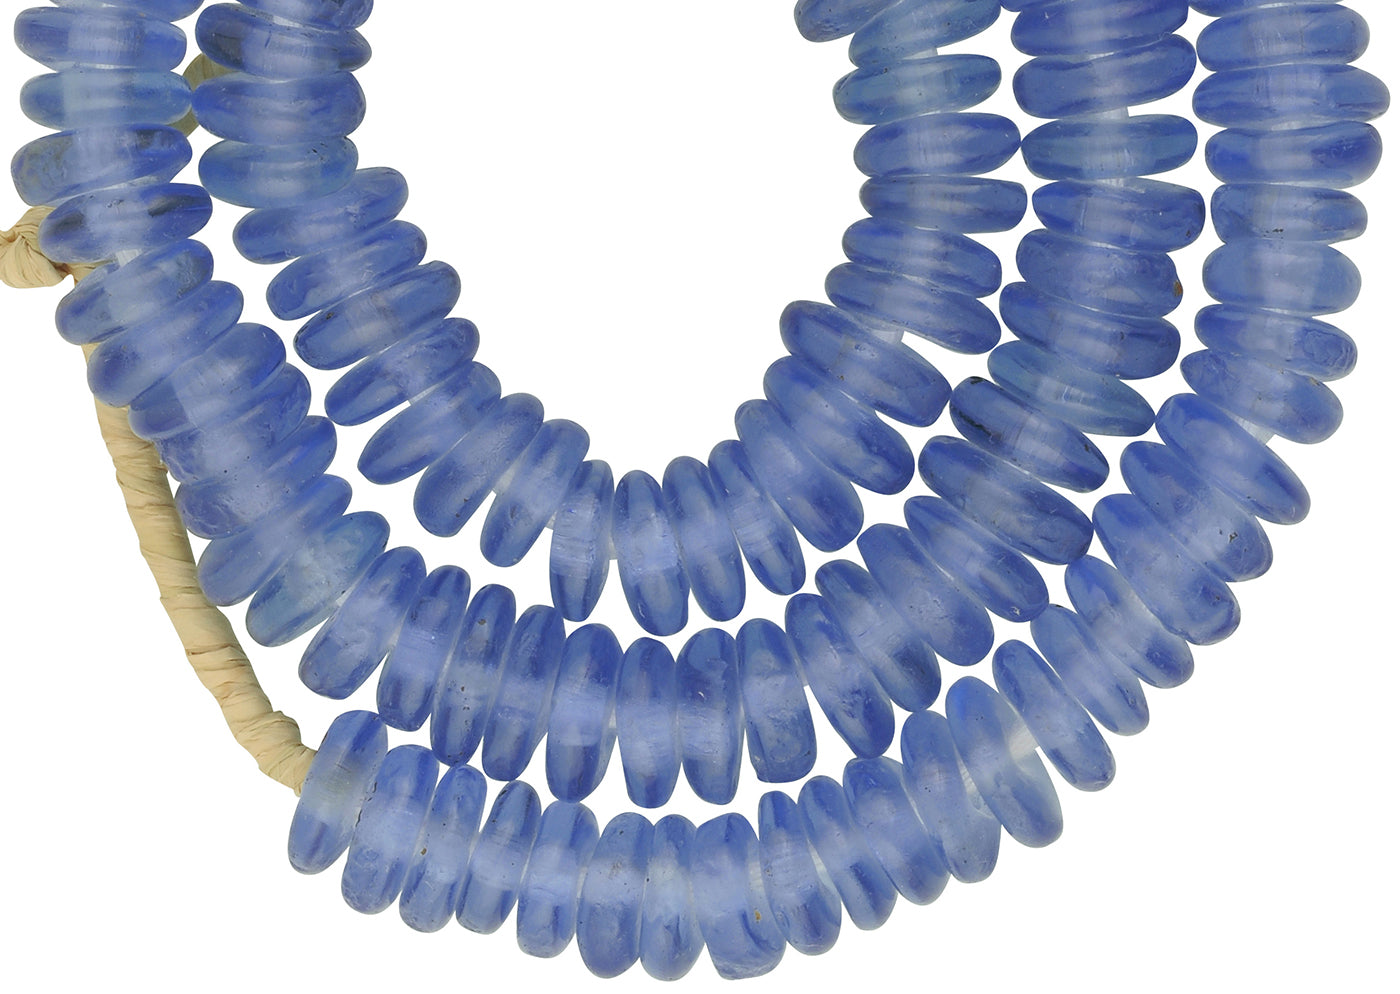 Beads recycled glass powder Krobo disks annular African handmade Ghana jewelry